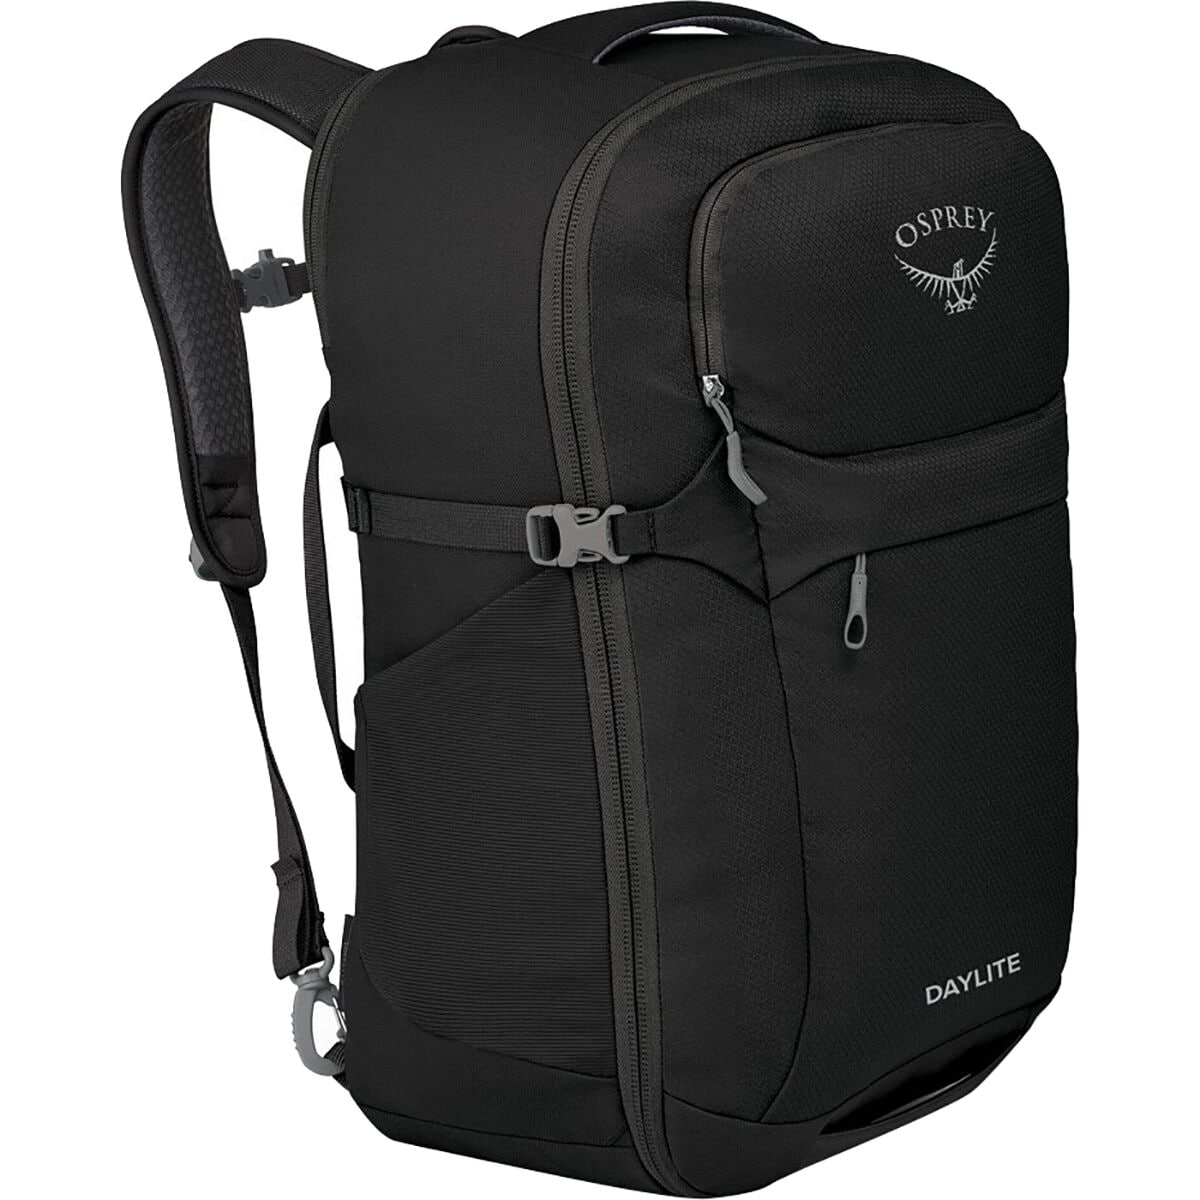 Osprey Packs Daylite Carry-On 44L Travel Pack Black, One SIze